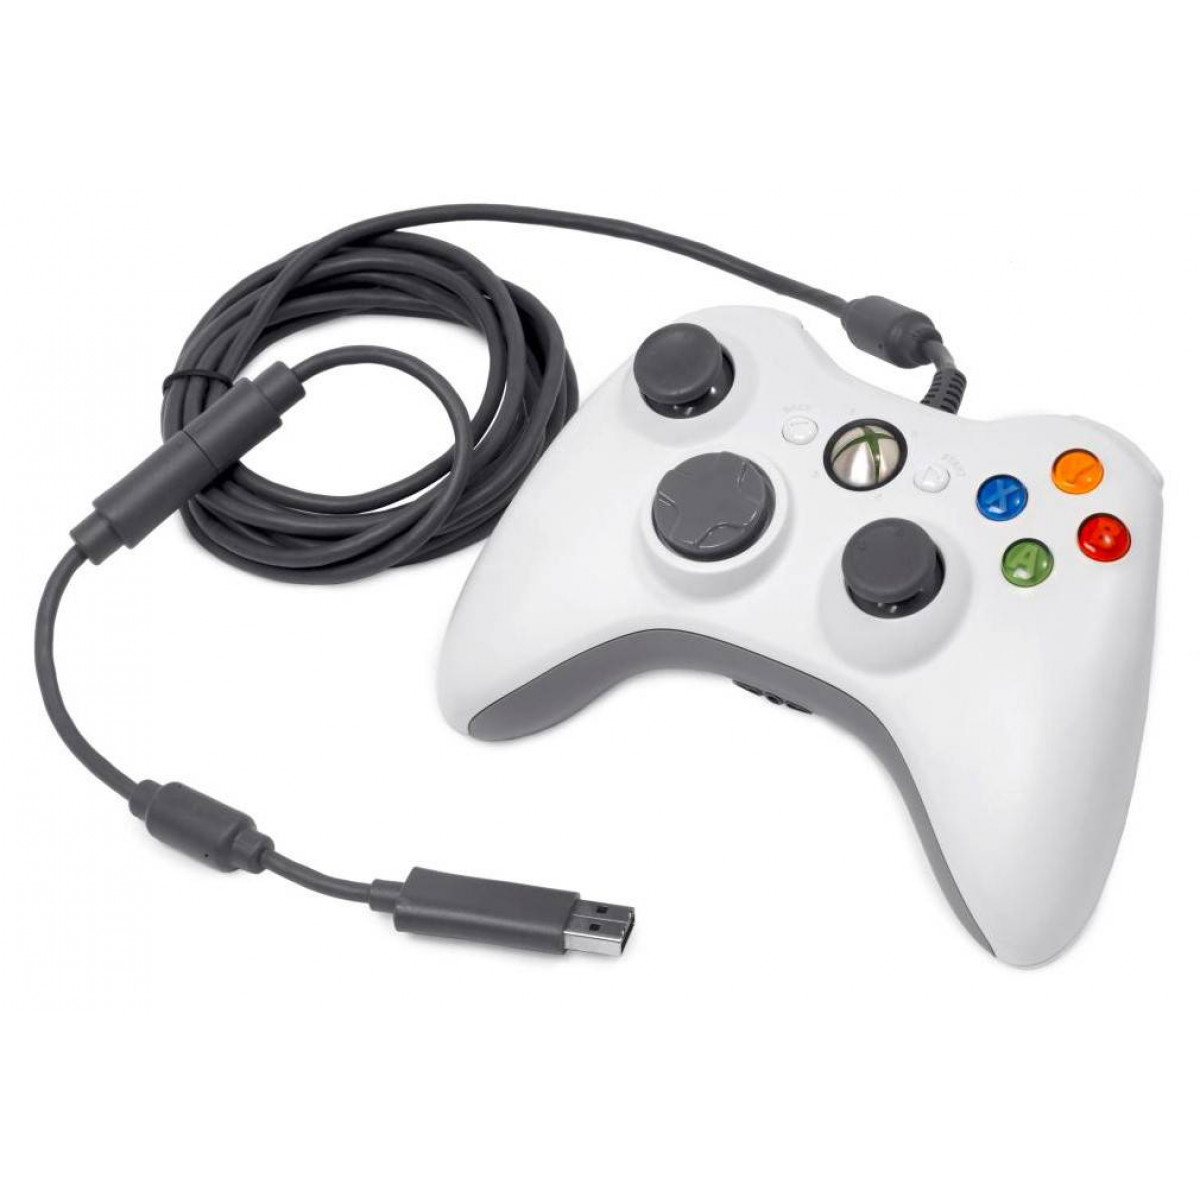 X360 геймпад. Геймпад Xbox 360 Controller. Геймпад Xbox 360 проводной. Джойстик геймпад для xbox360. Проводной USB геймпад Xbox 360.